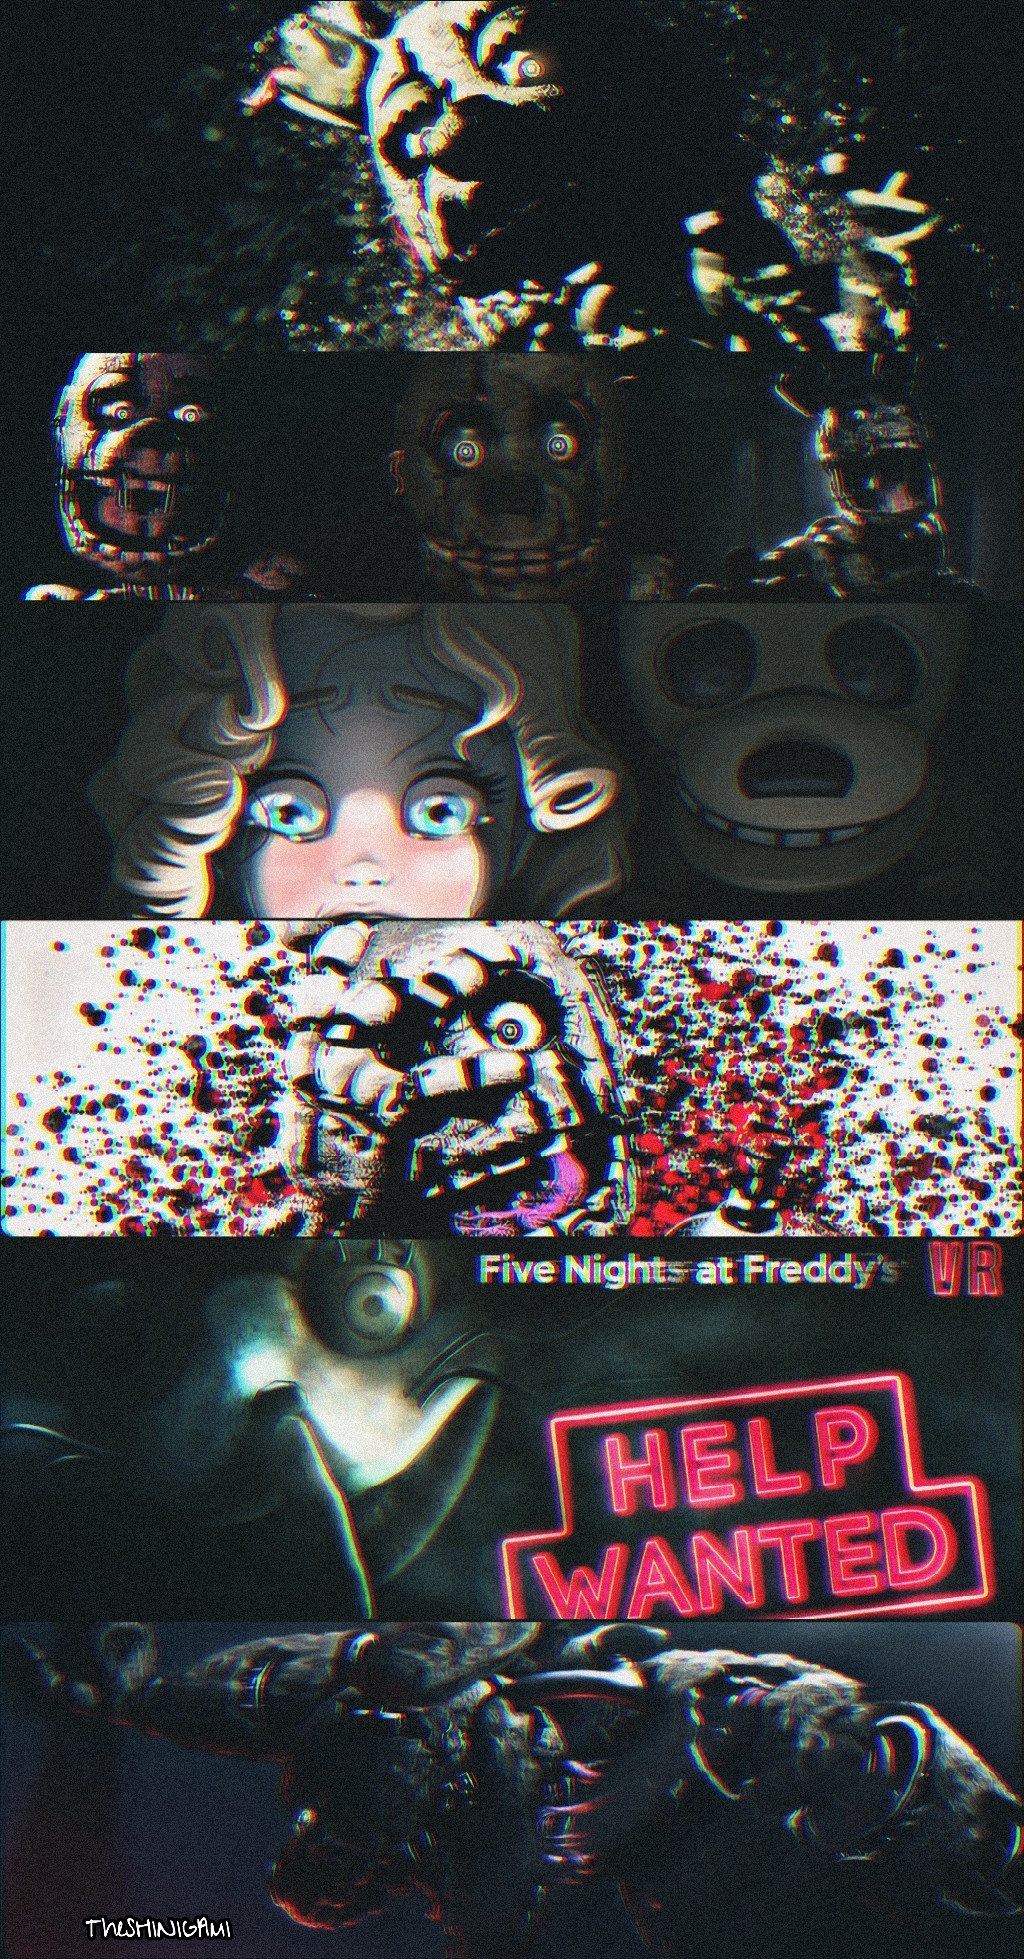 Five Nights at Freddy's 3 Wallpaper by gcjdfkjbrfguithgiuht on DeviantArt